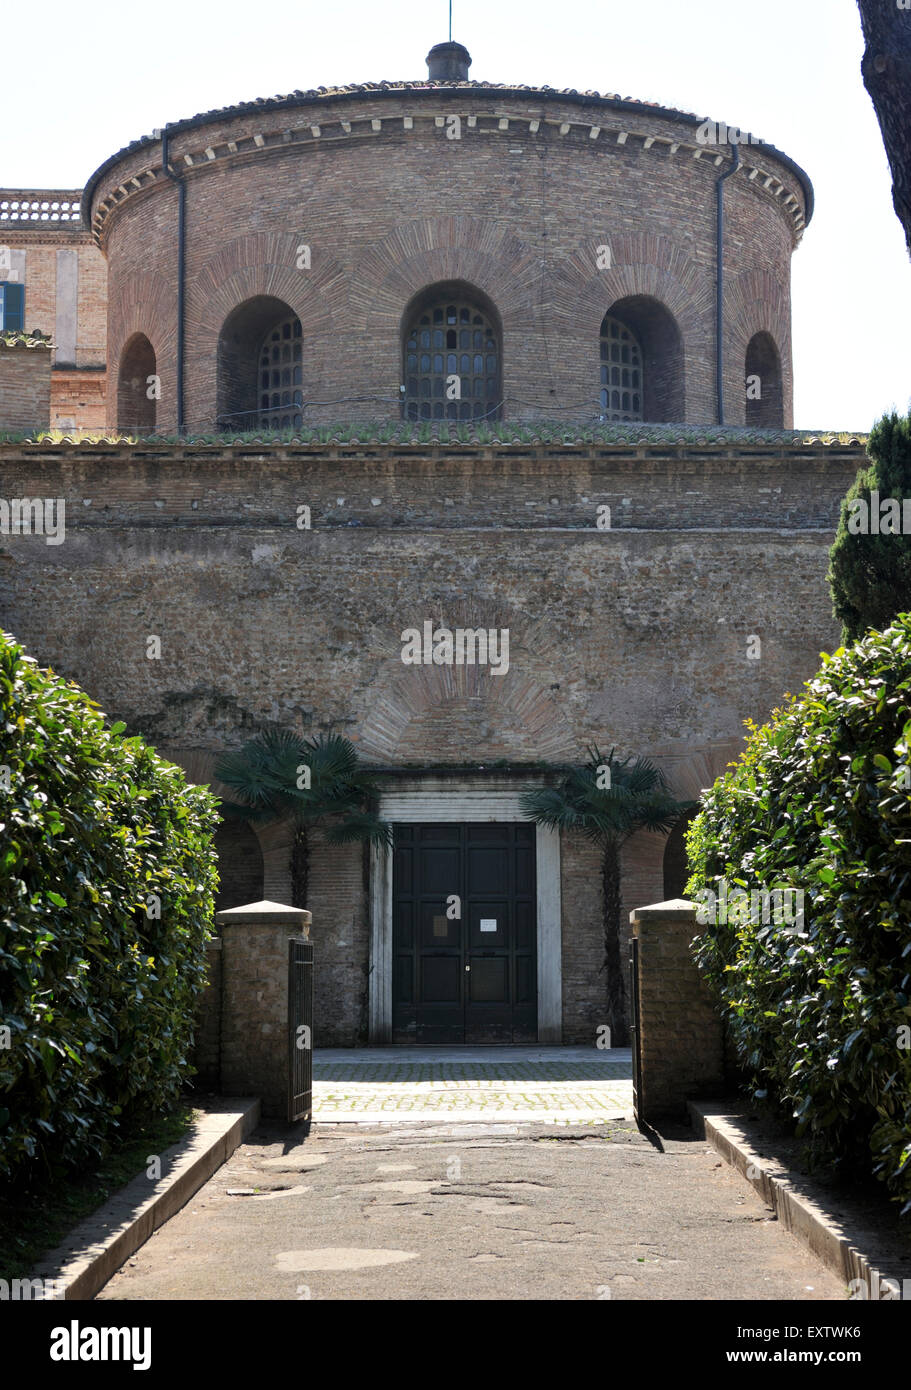 italy, rome, mausoleum of santa costanza Stock Photo